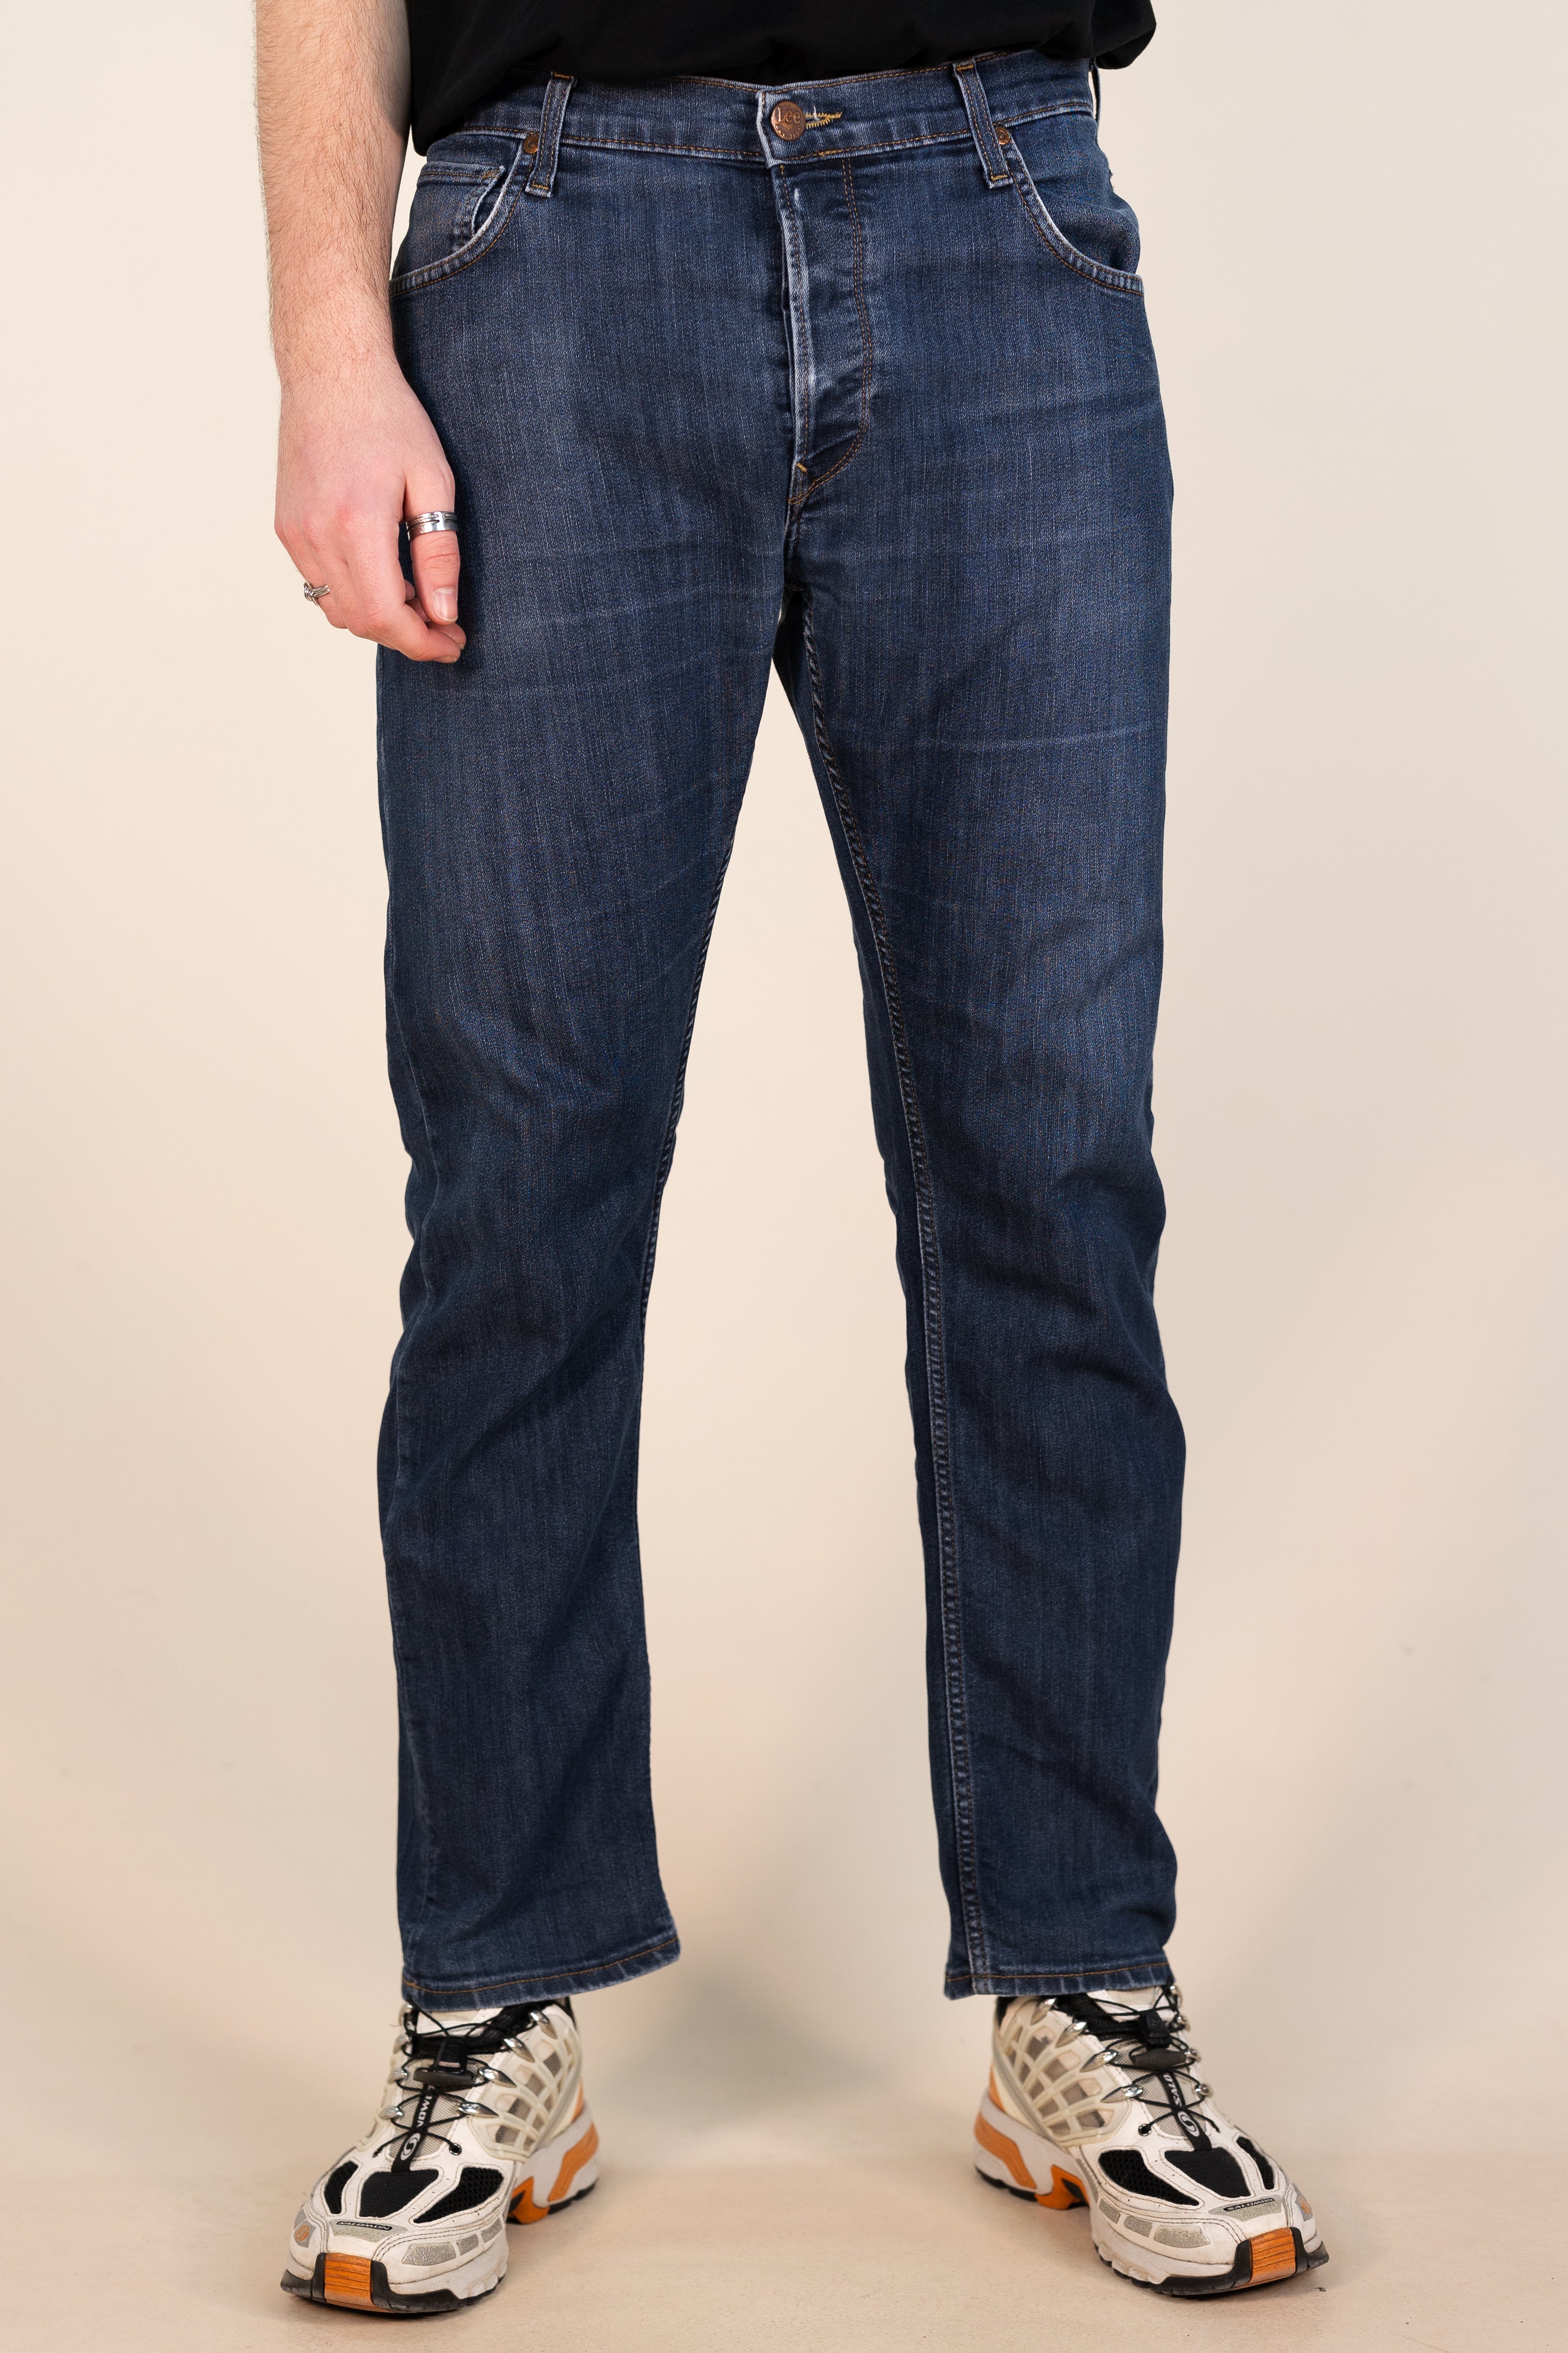 Men's Vintage Jeans | ThriftTale